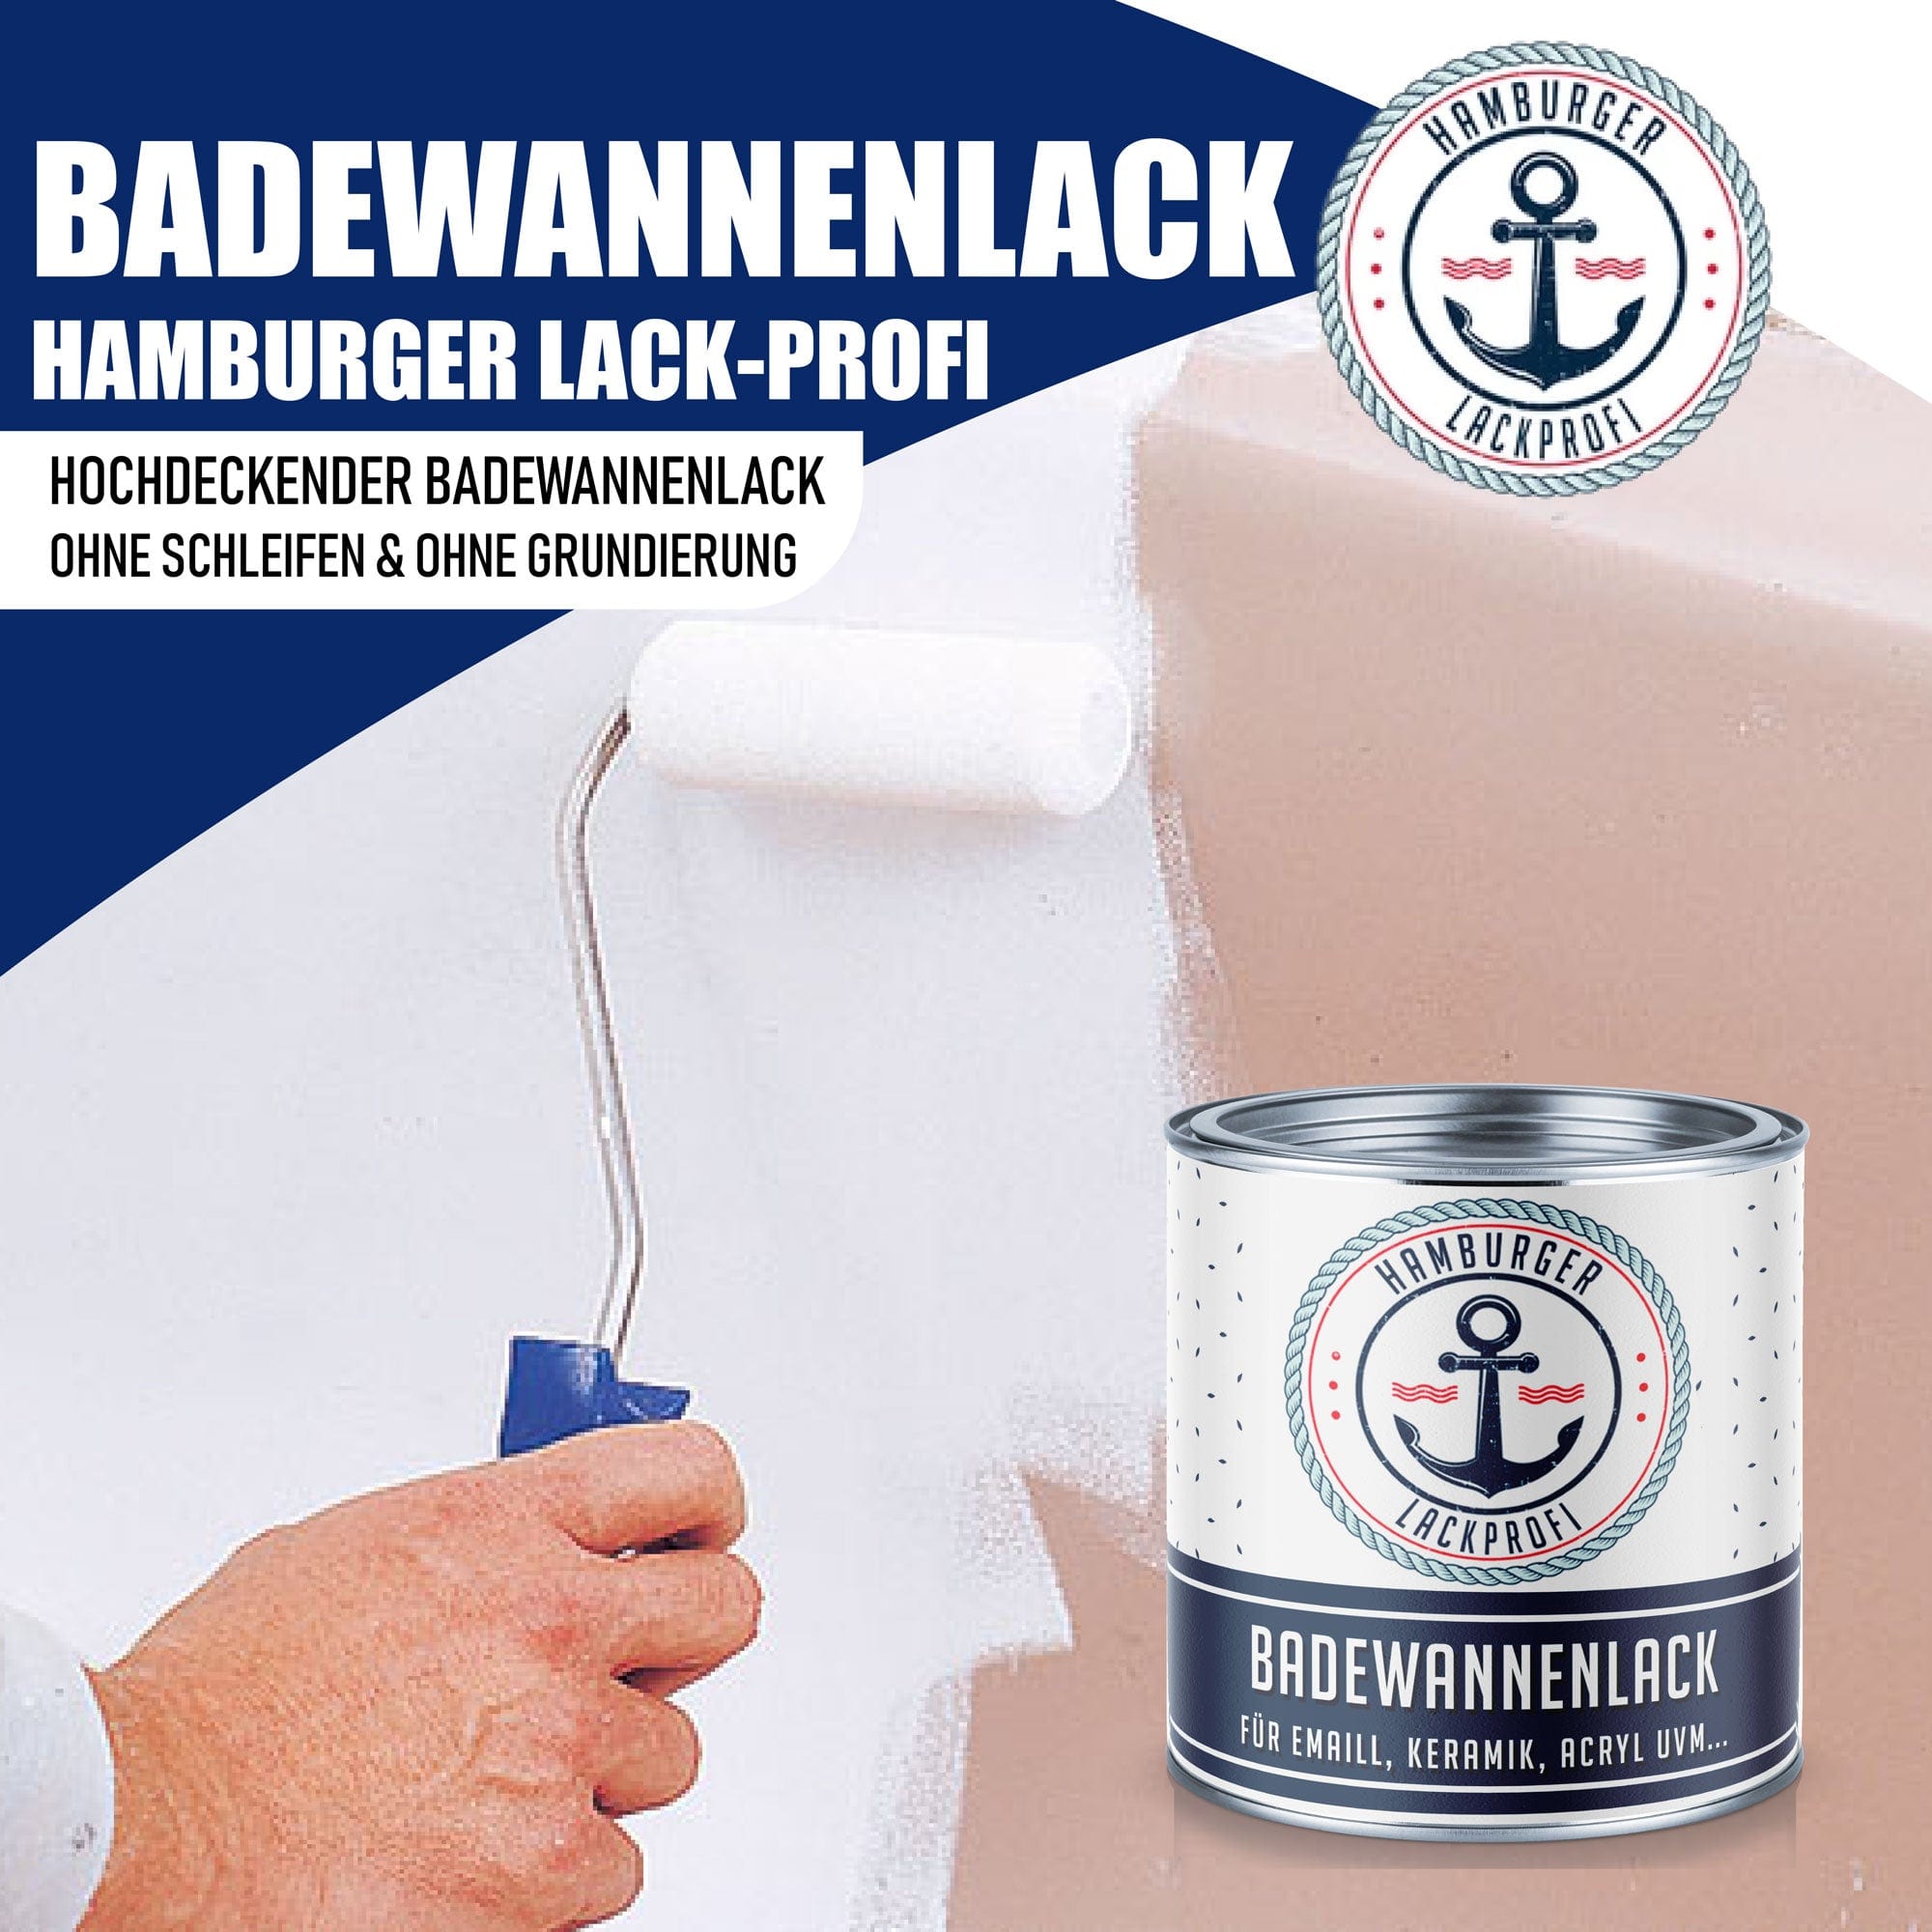 Hamburger Lack-Profi Badewannenlack Hamburger Lack-Profi 2K Badewannenlack Schwarzgrau RAL 7021 - Glänzend / Seidenmatt / Matt